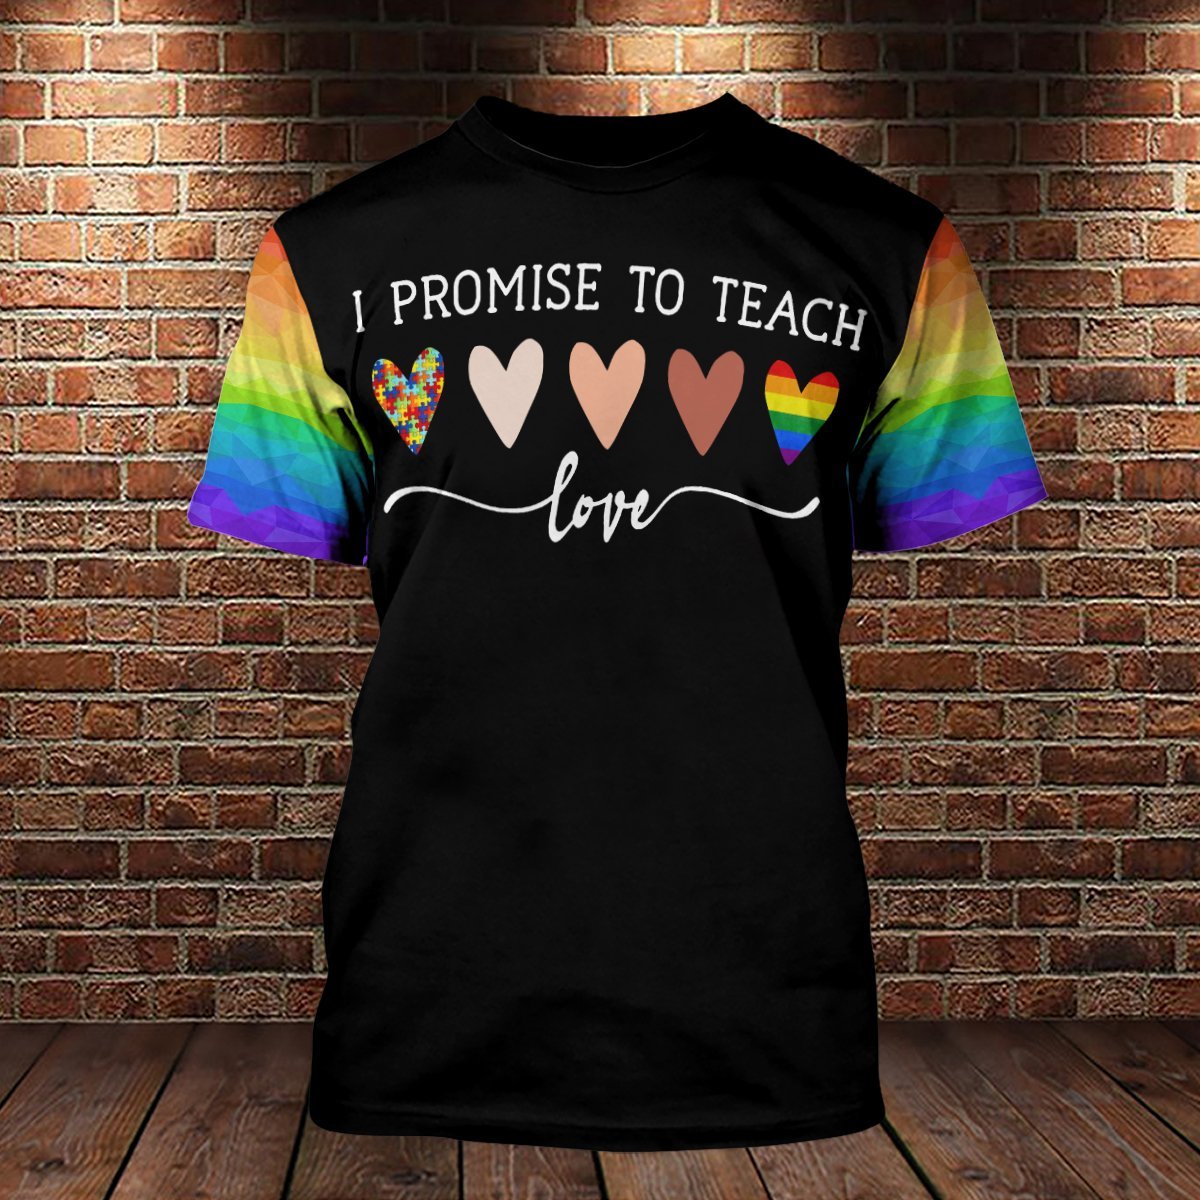 Unifinz LGBT Autism Melanin T-shirt I Promise To Teach Love LGBT Rainbow Colors T-shirt LGBT Hoodie 2022